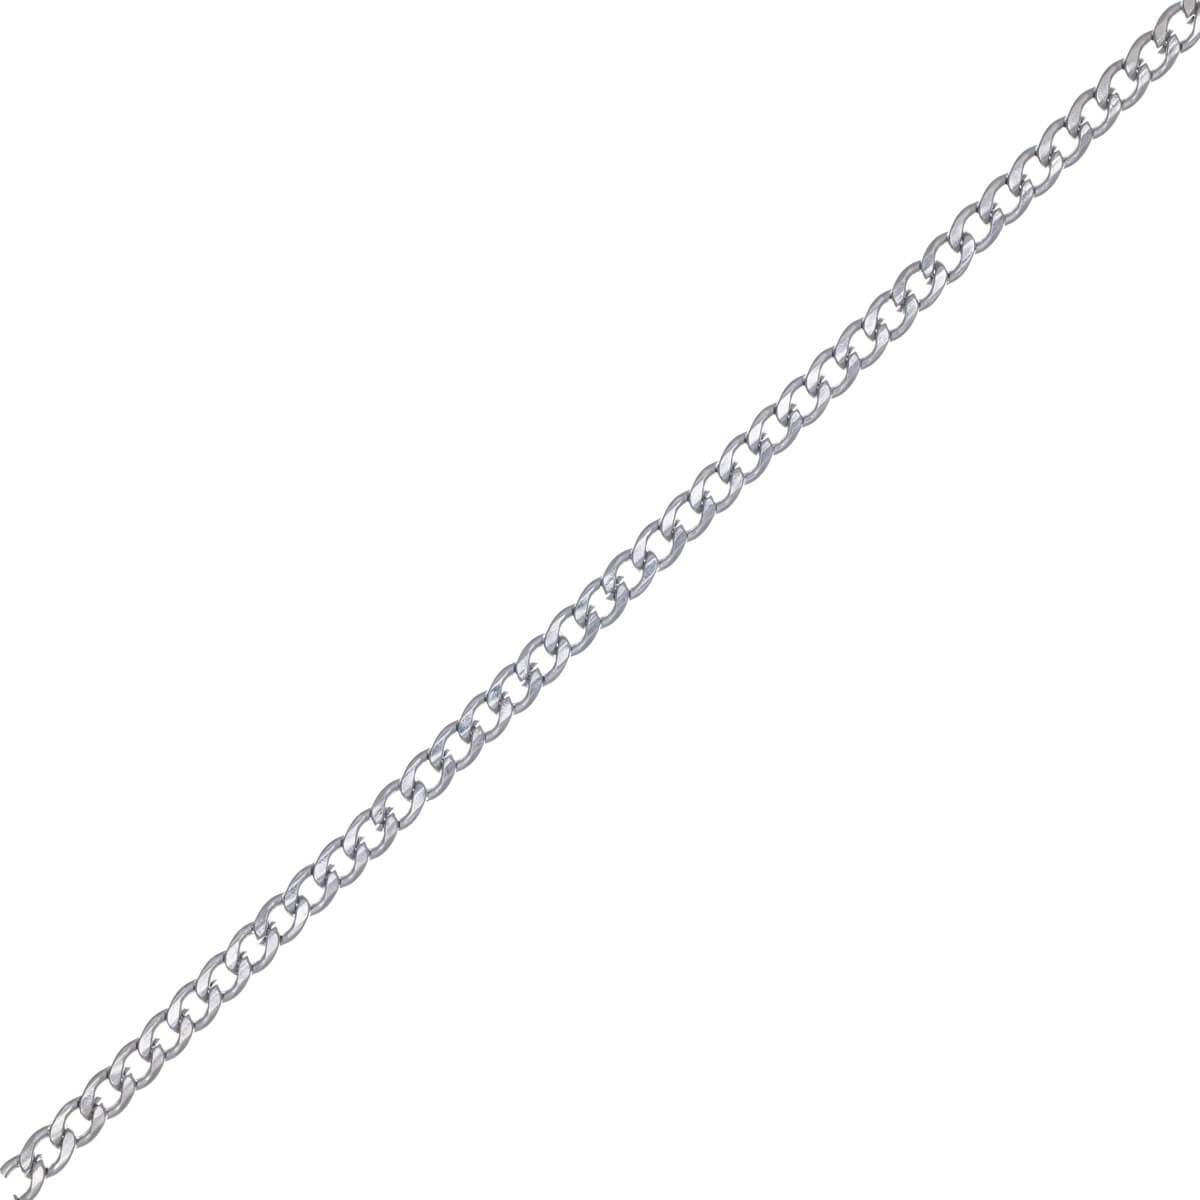 Flat armour chain narrow neck chain 4mm 60cm